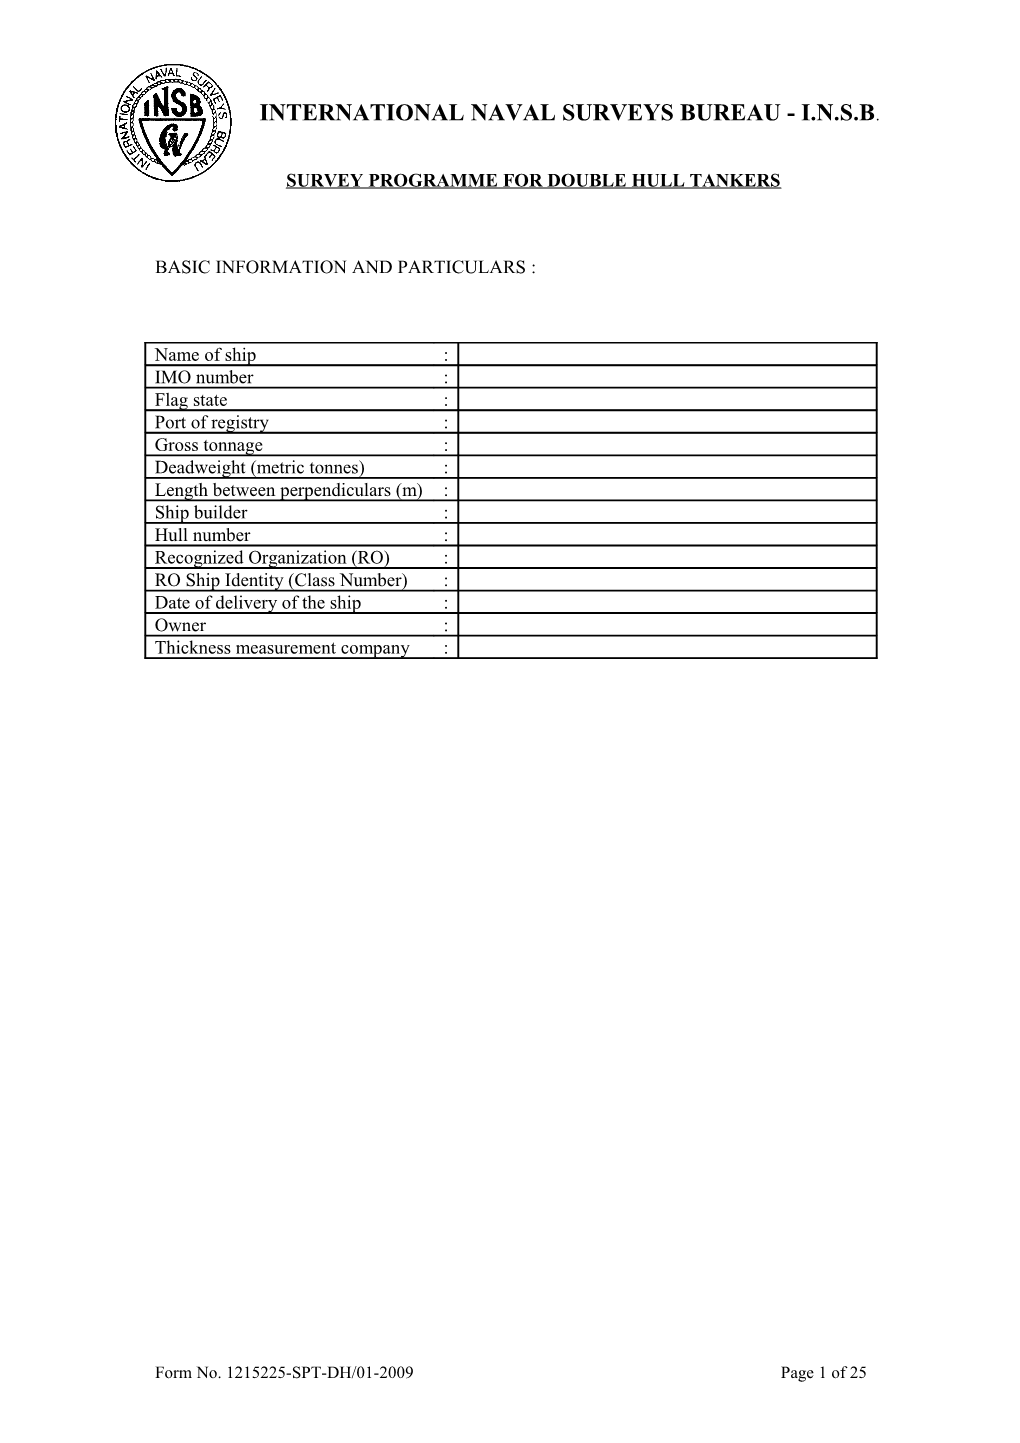 Condition Assessment Scheme (Cas)